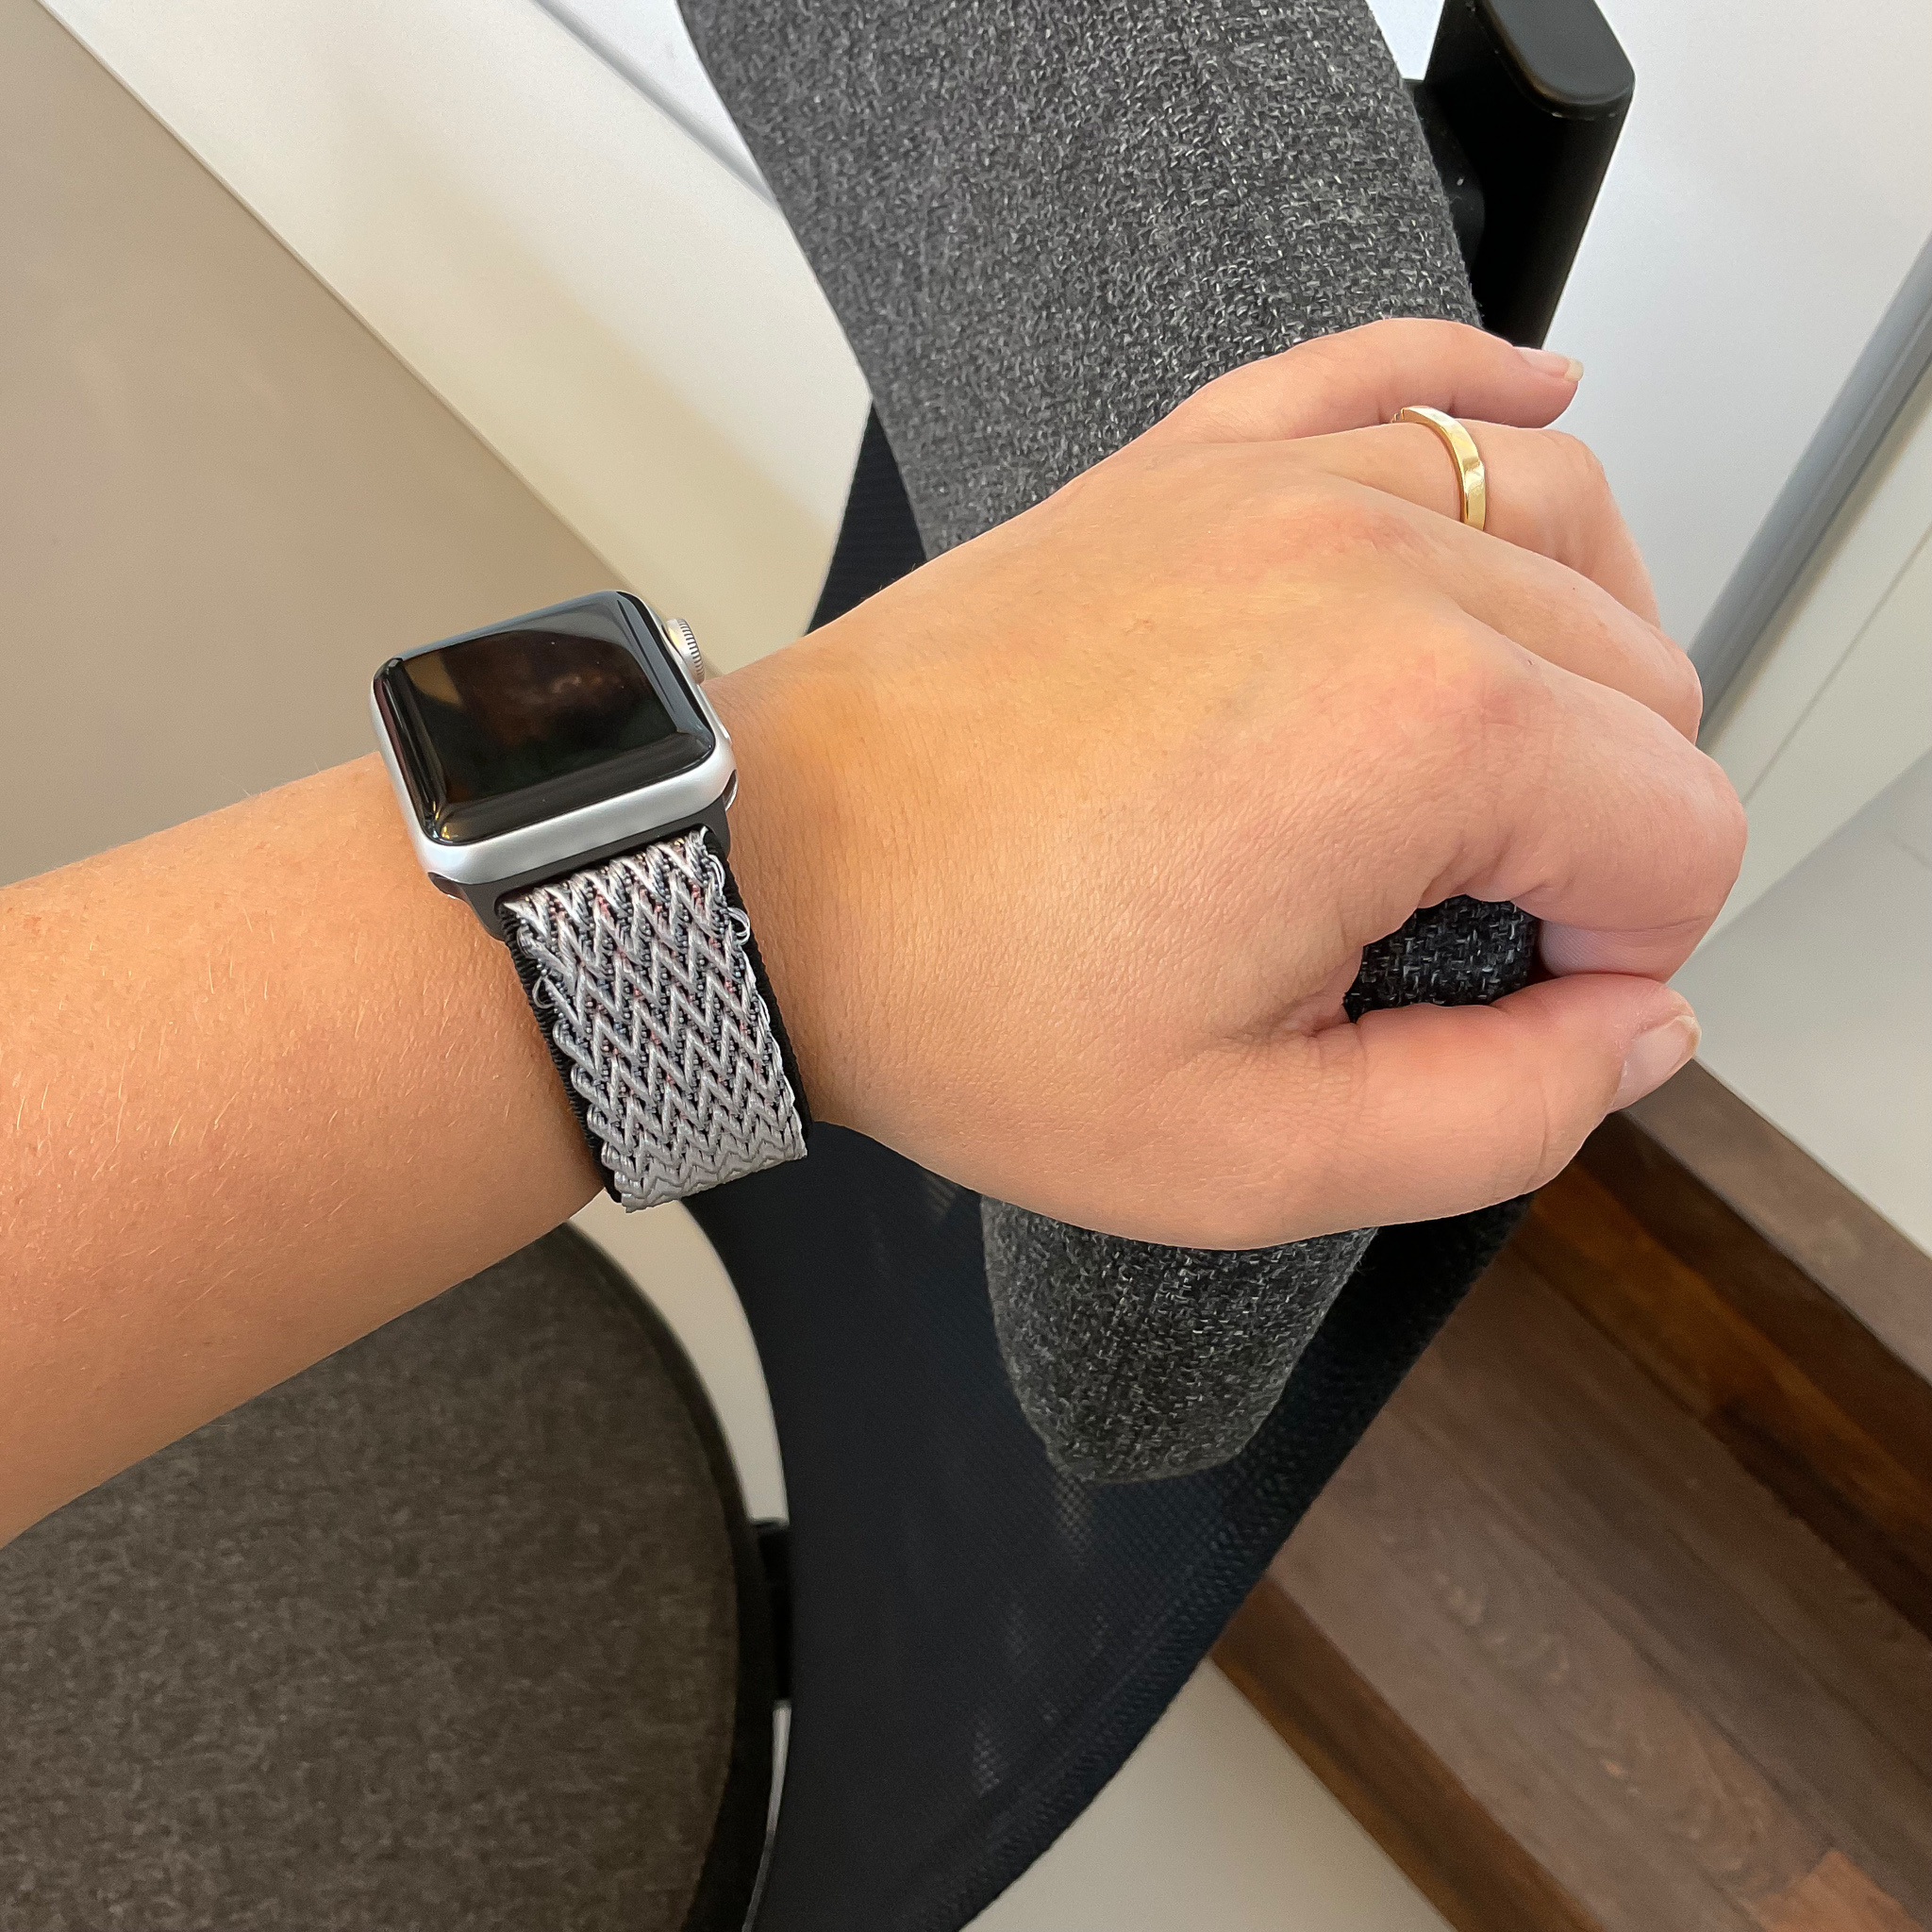 Apple Watch Nylon Solo Loop - Herzschlag blau